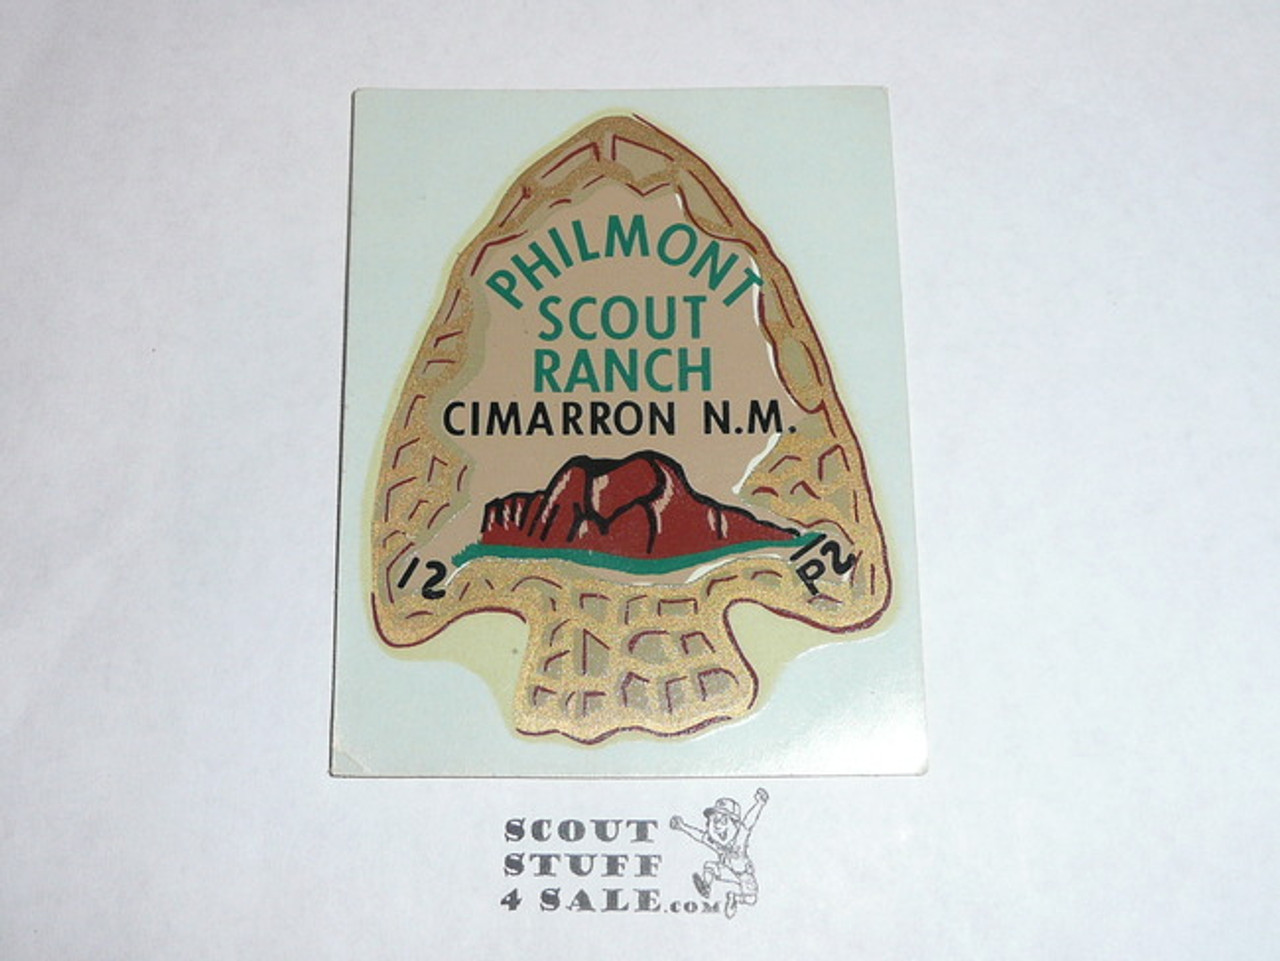 Philmont Scout Ranch Arrowhead Decal